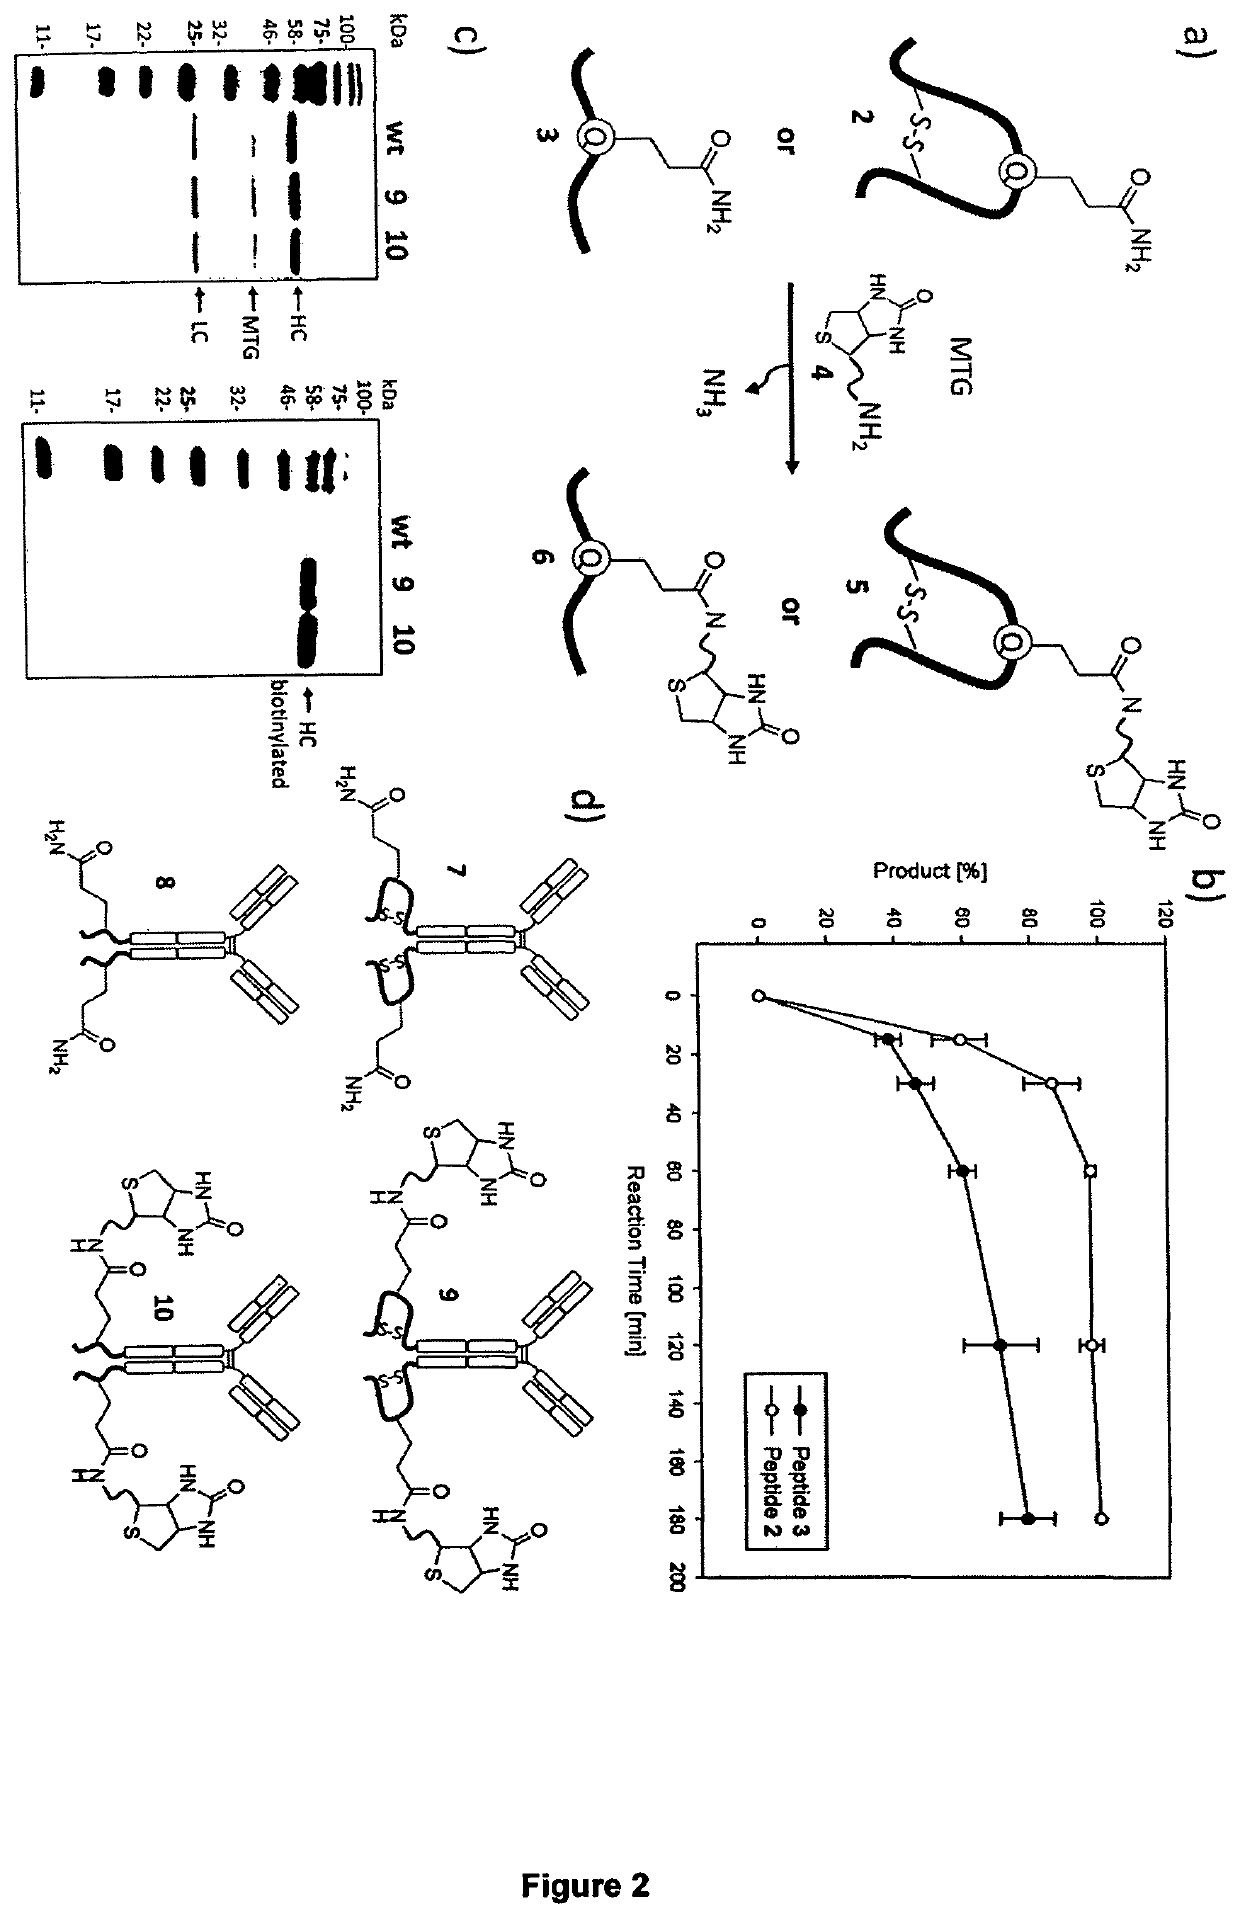 Transglutamine tag for efficient site-specific bioconjugation